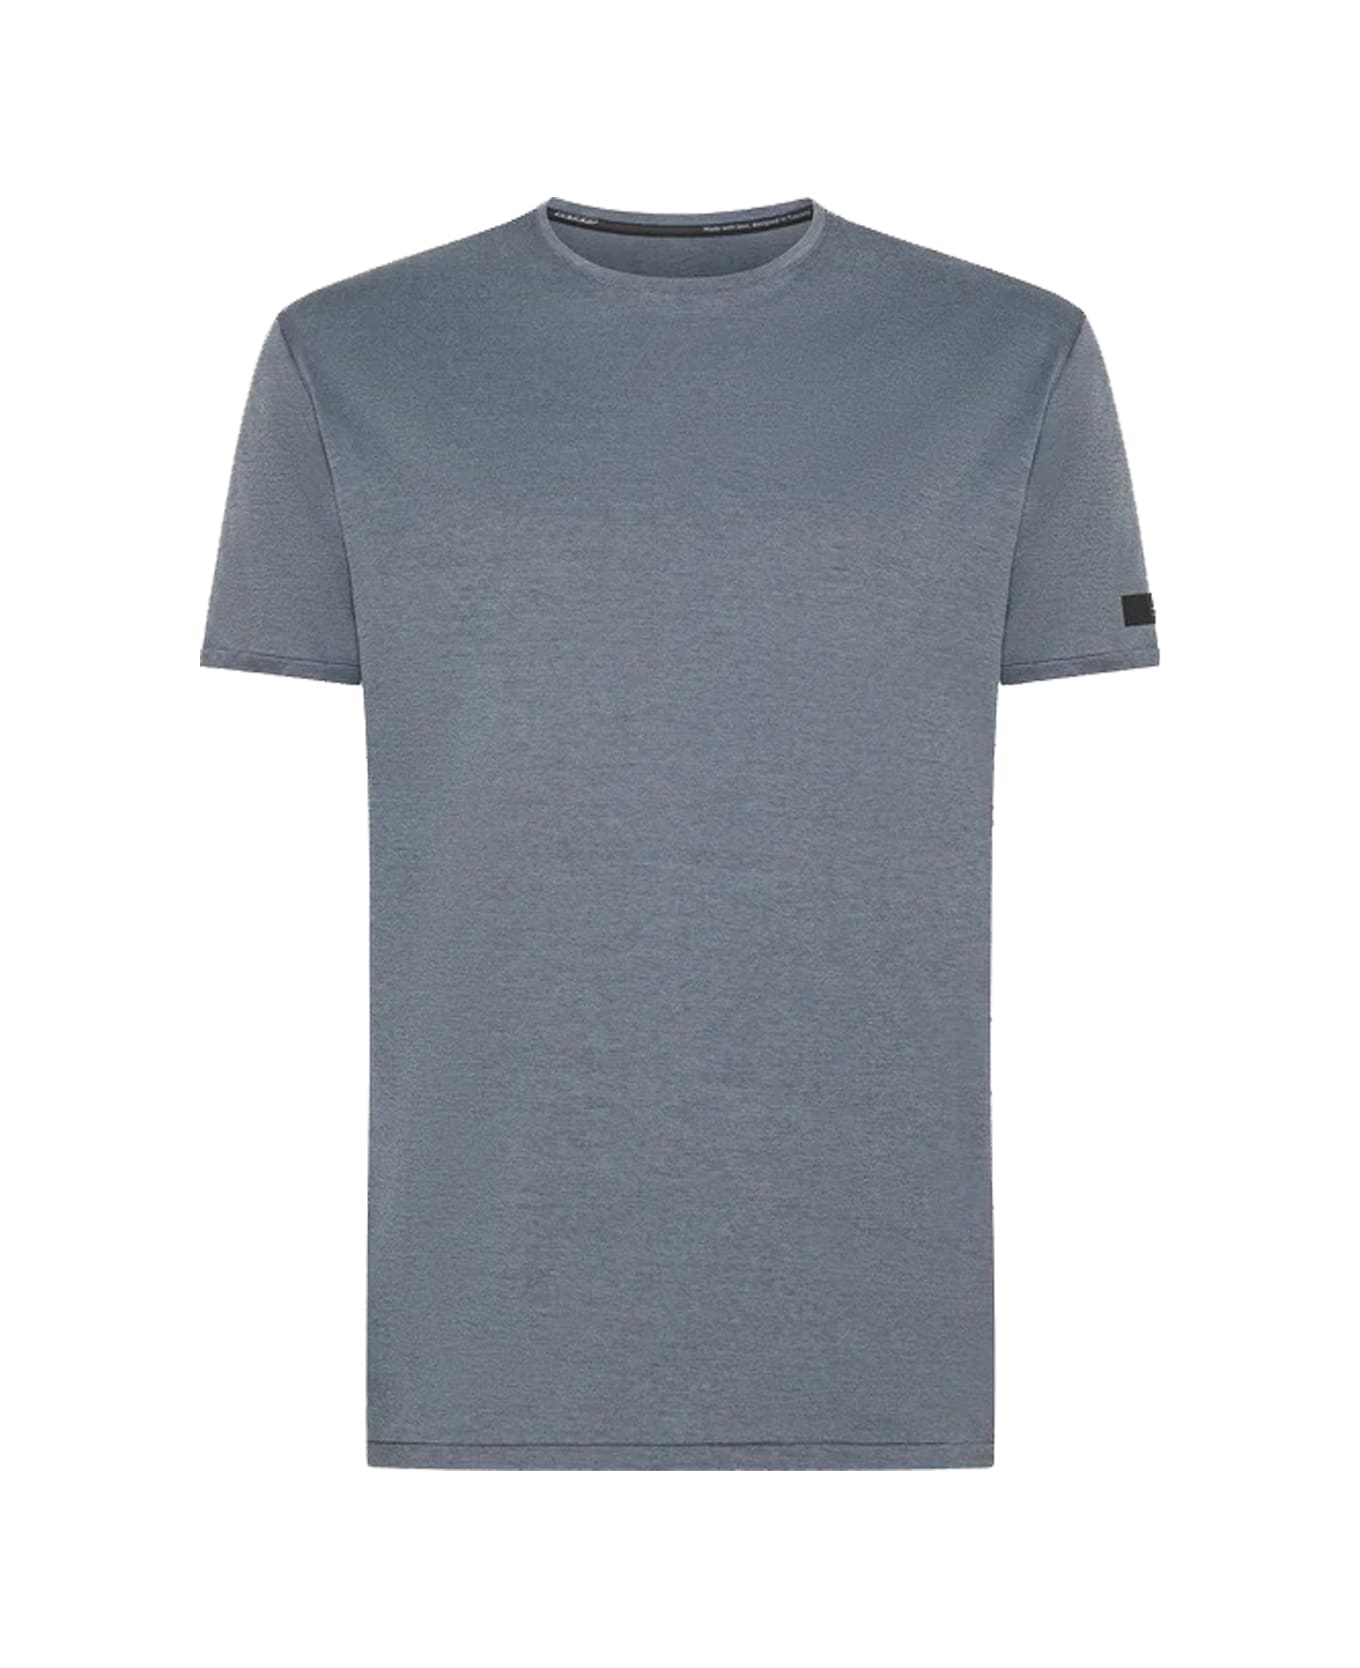 RRD - Roberto Ricci Design T-shirt - Clear Blue